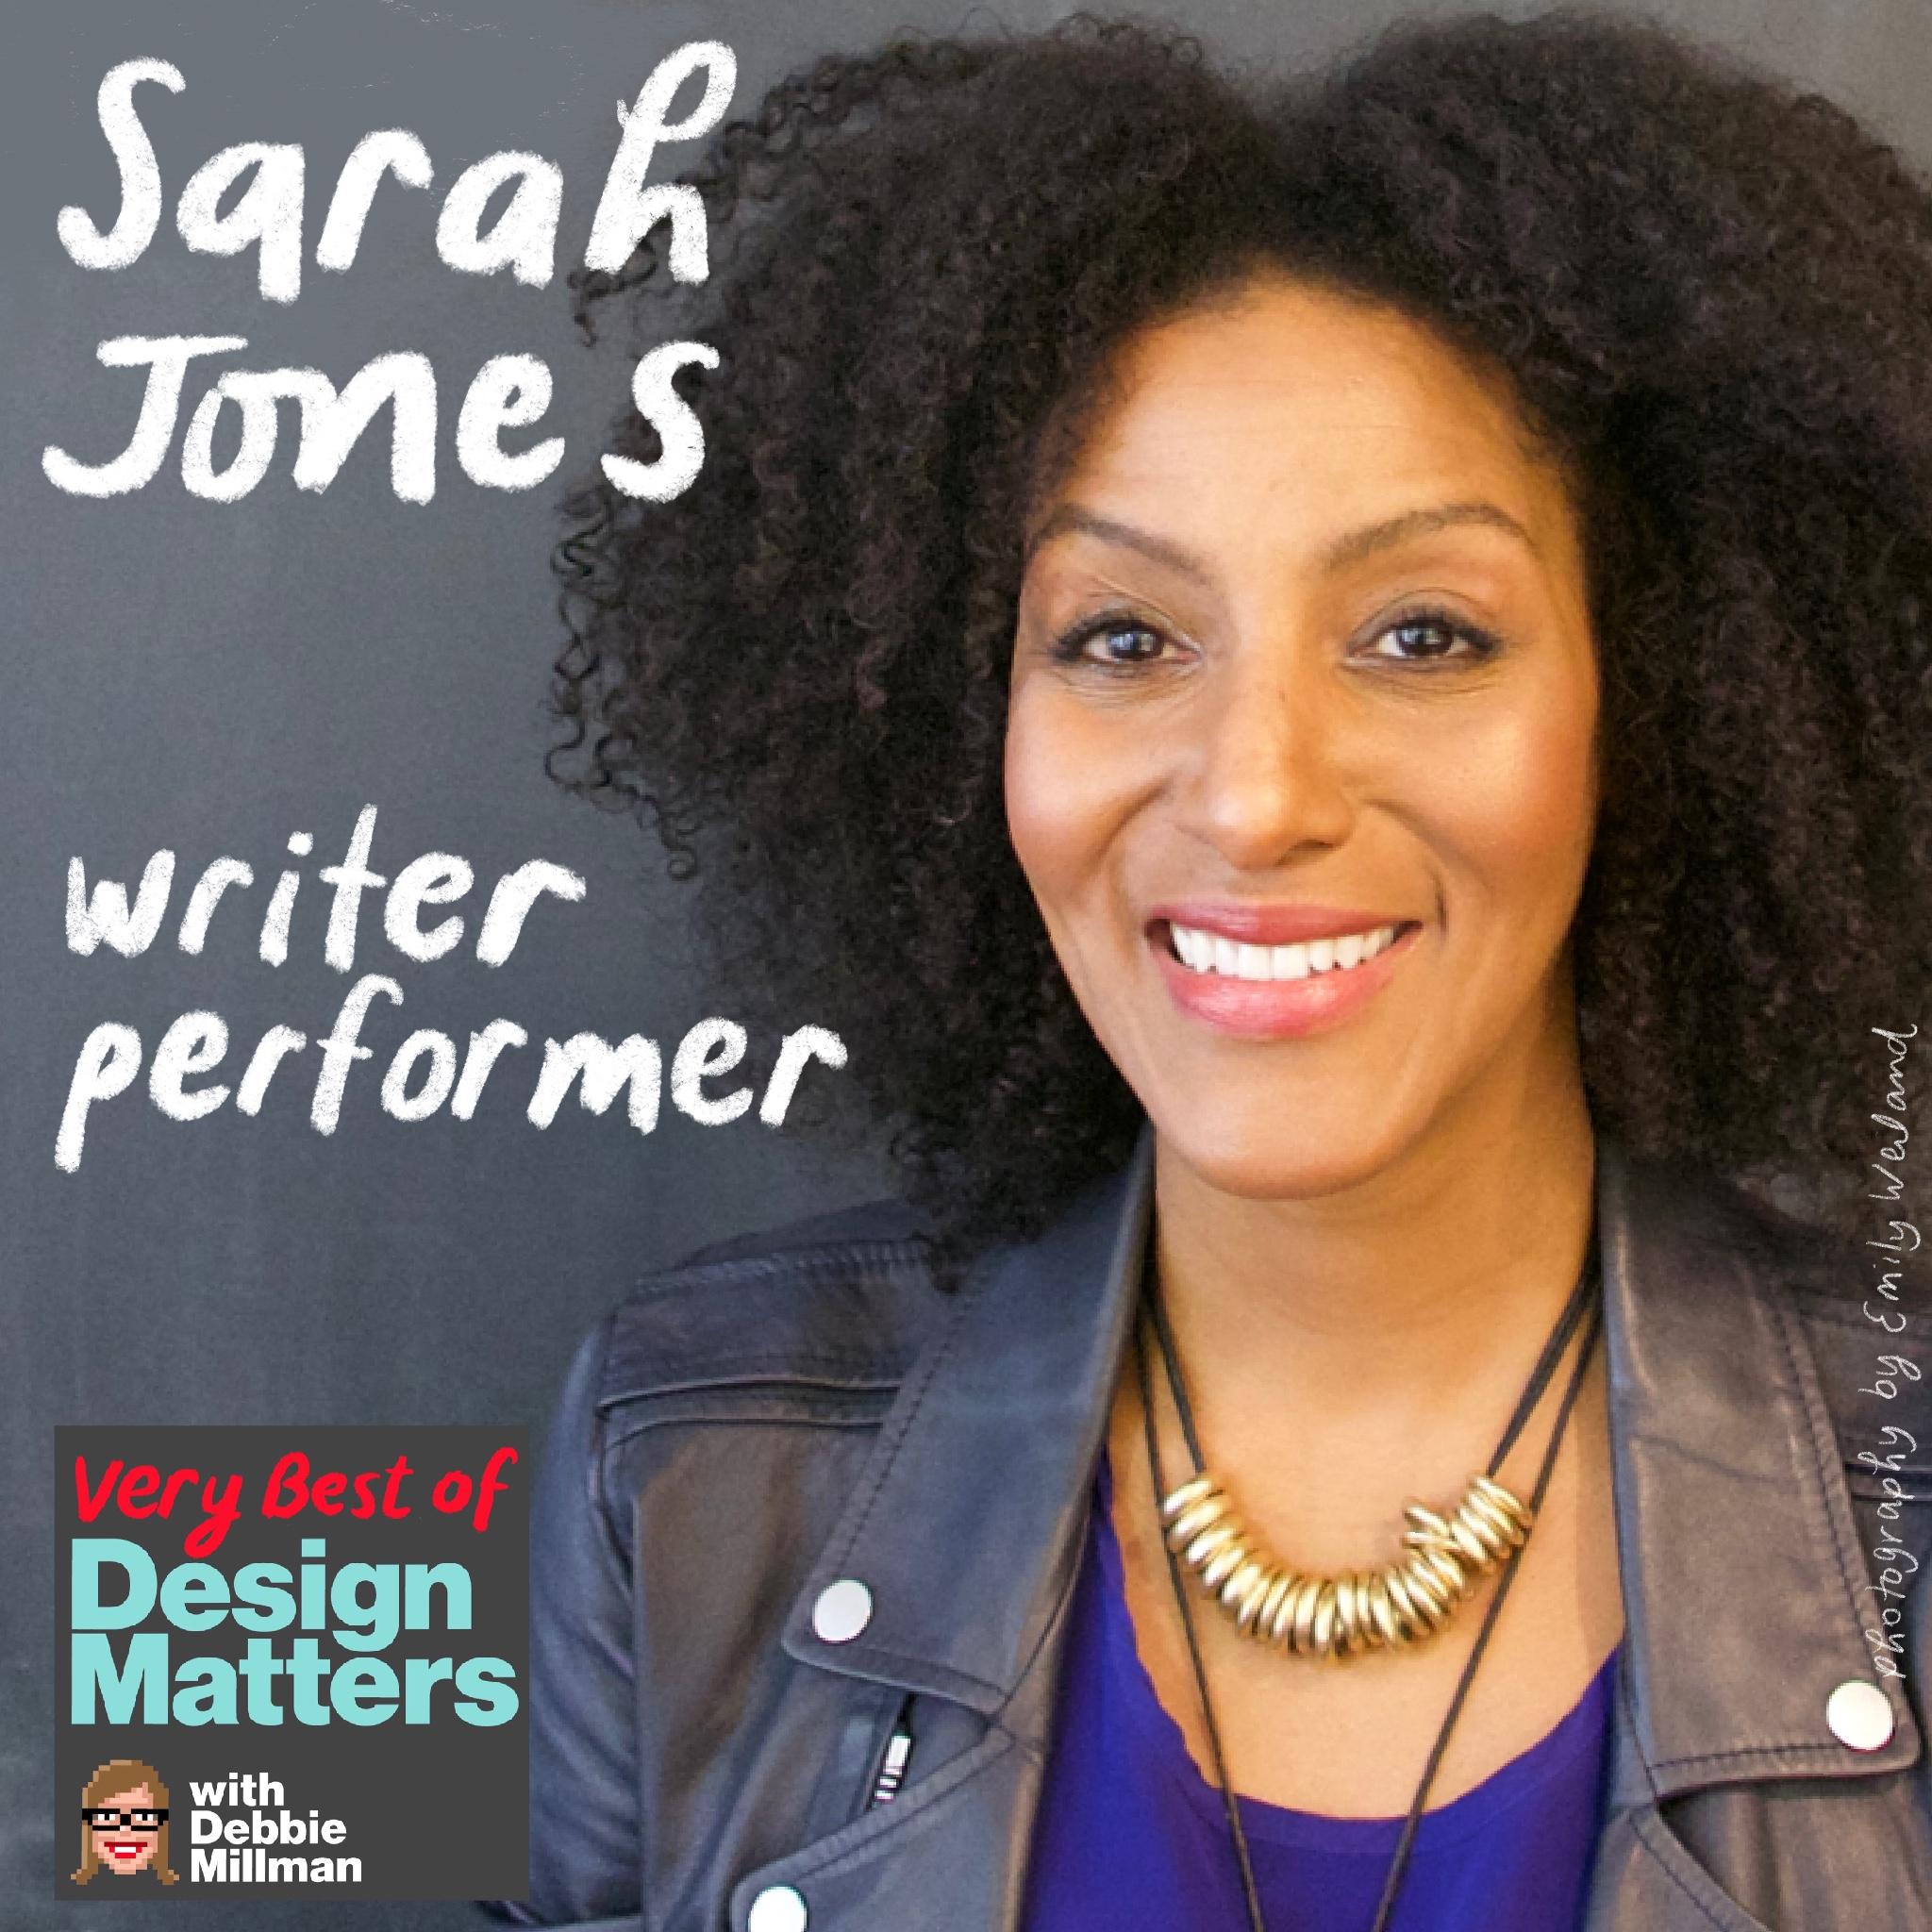 Thumbnail for "Best of Design Matters: Sarah Jones".